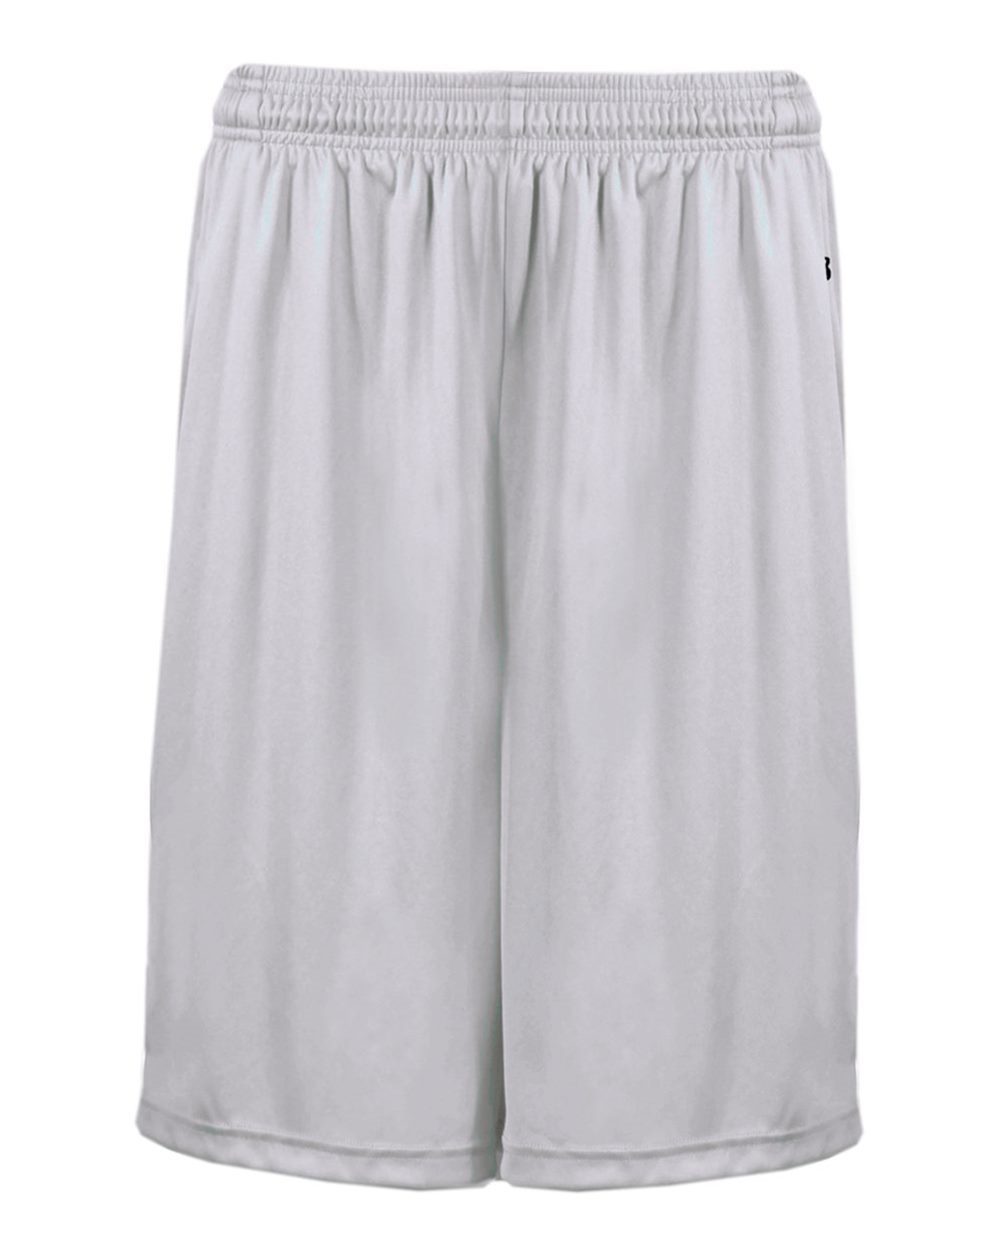 Badger 2119 - Youth B-Core Pocketed Shorts